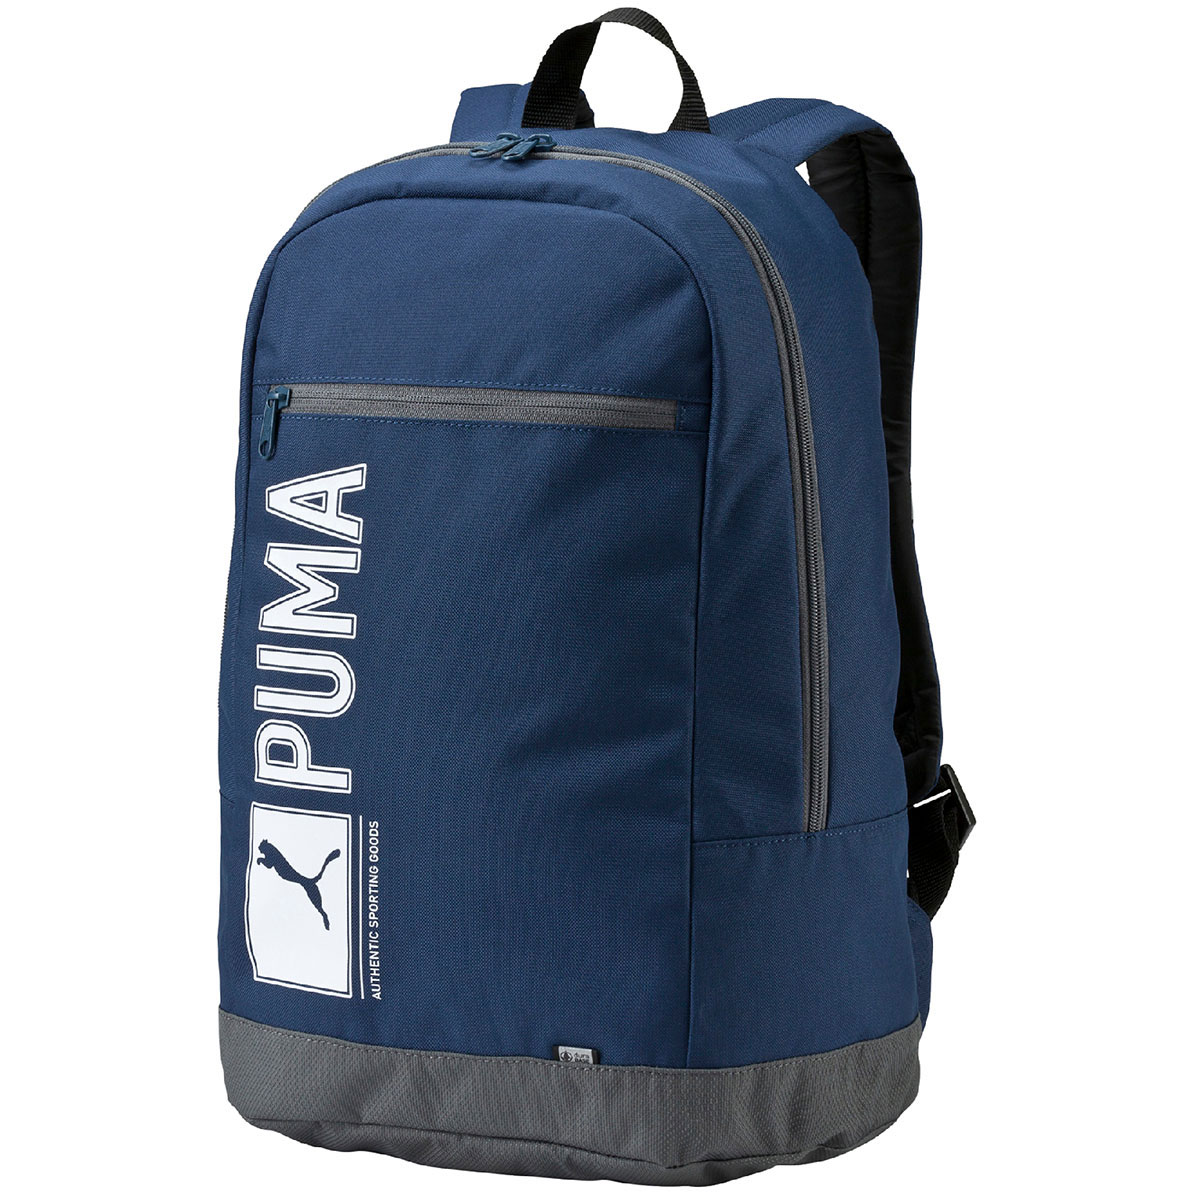 balo puma pioneer backpack màu xanh navy